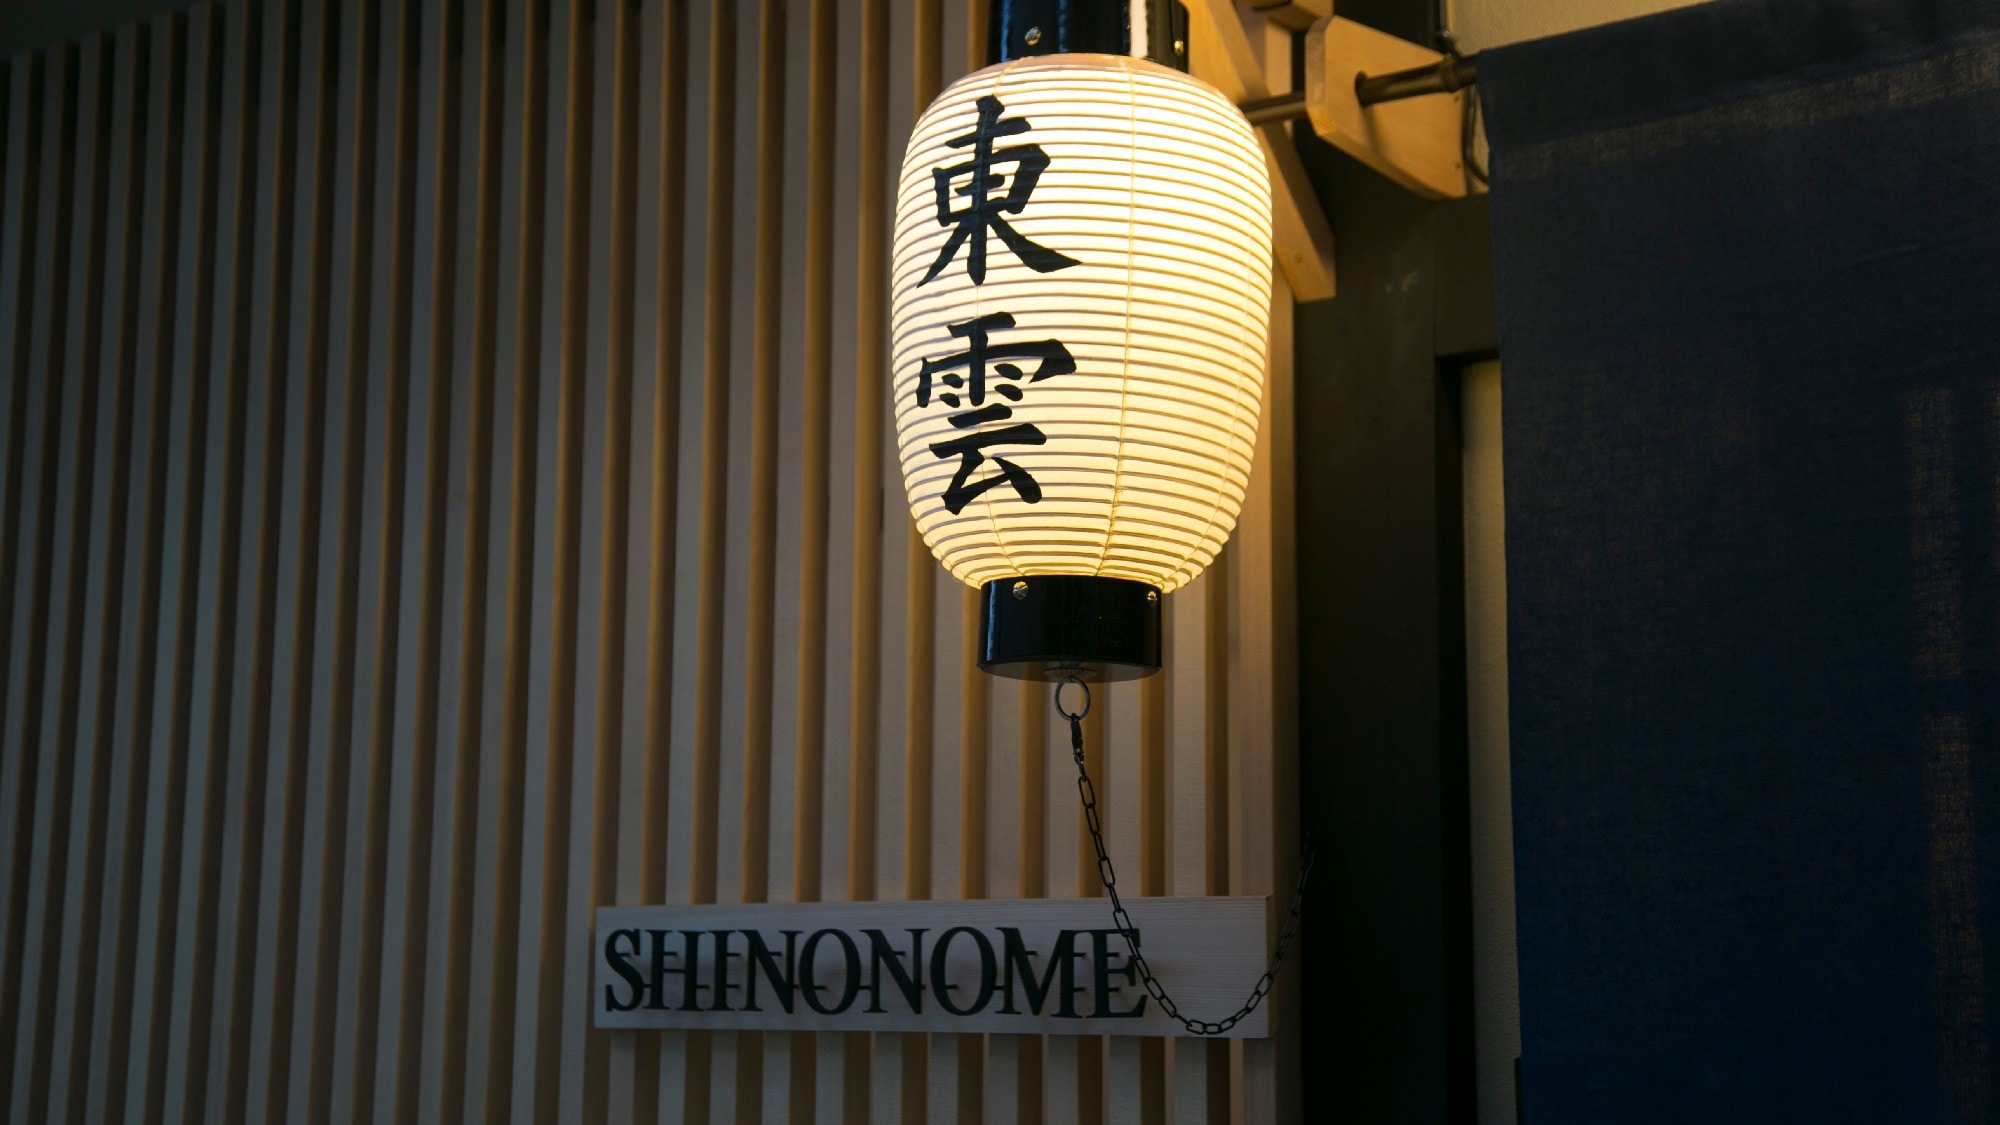 Room Shinonome entrance sign